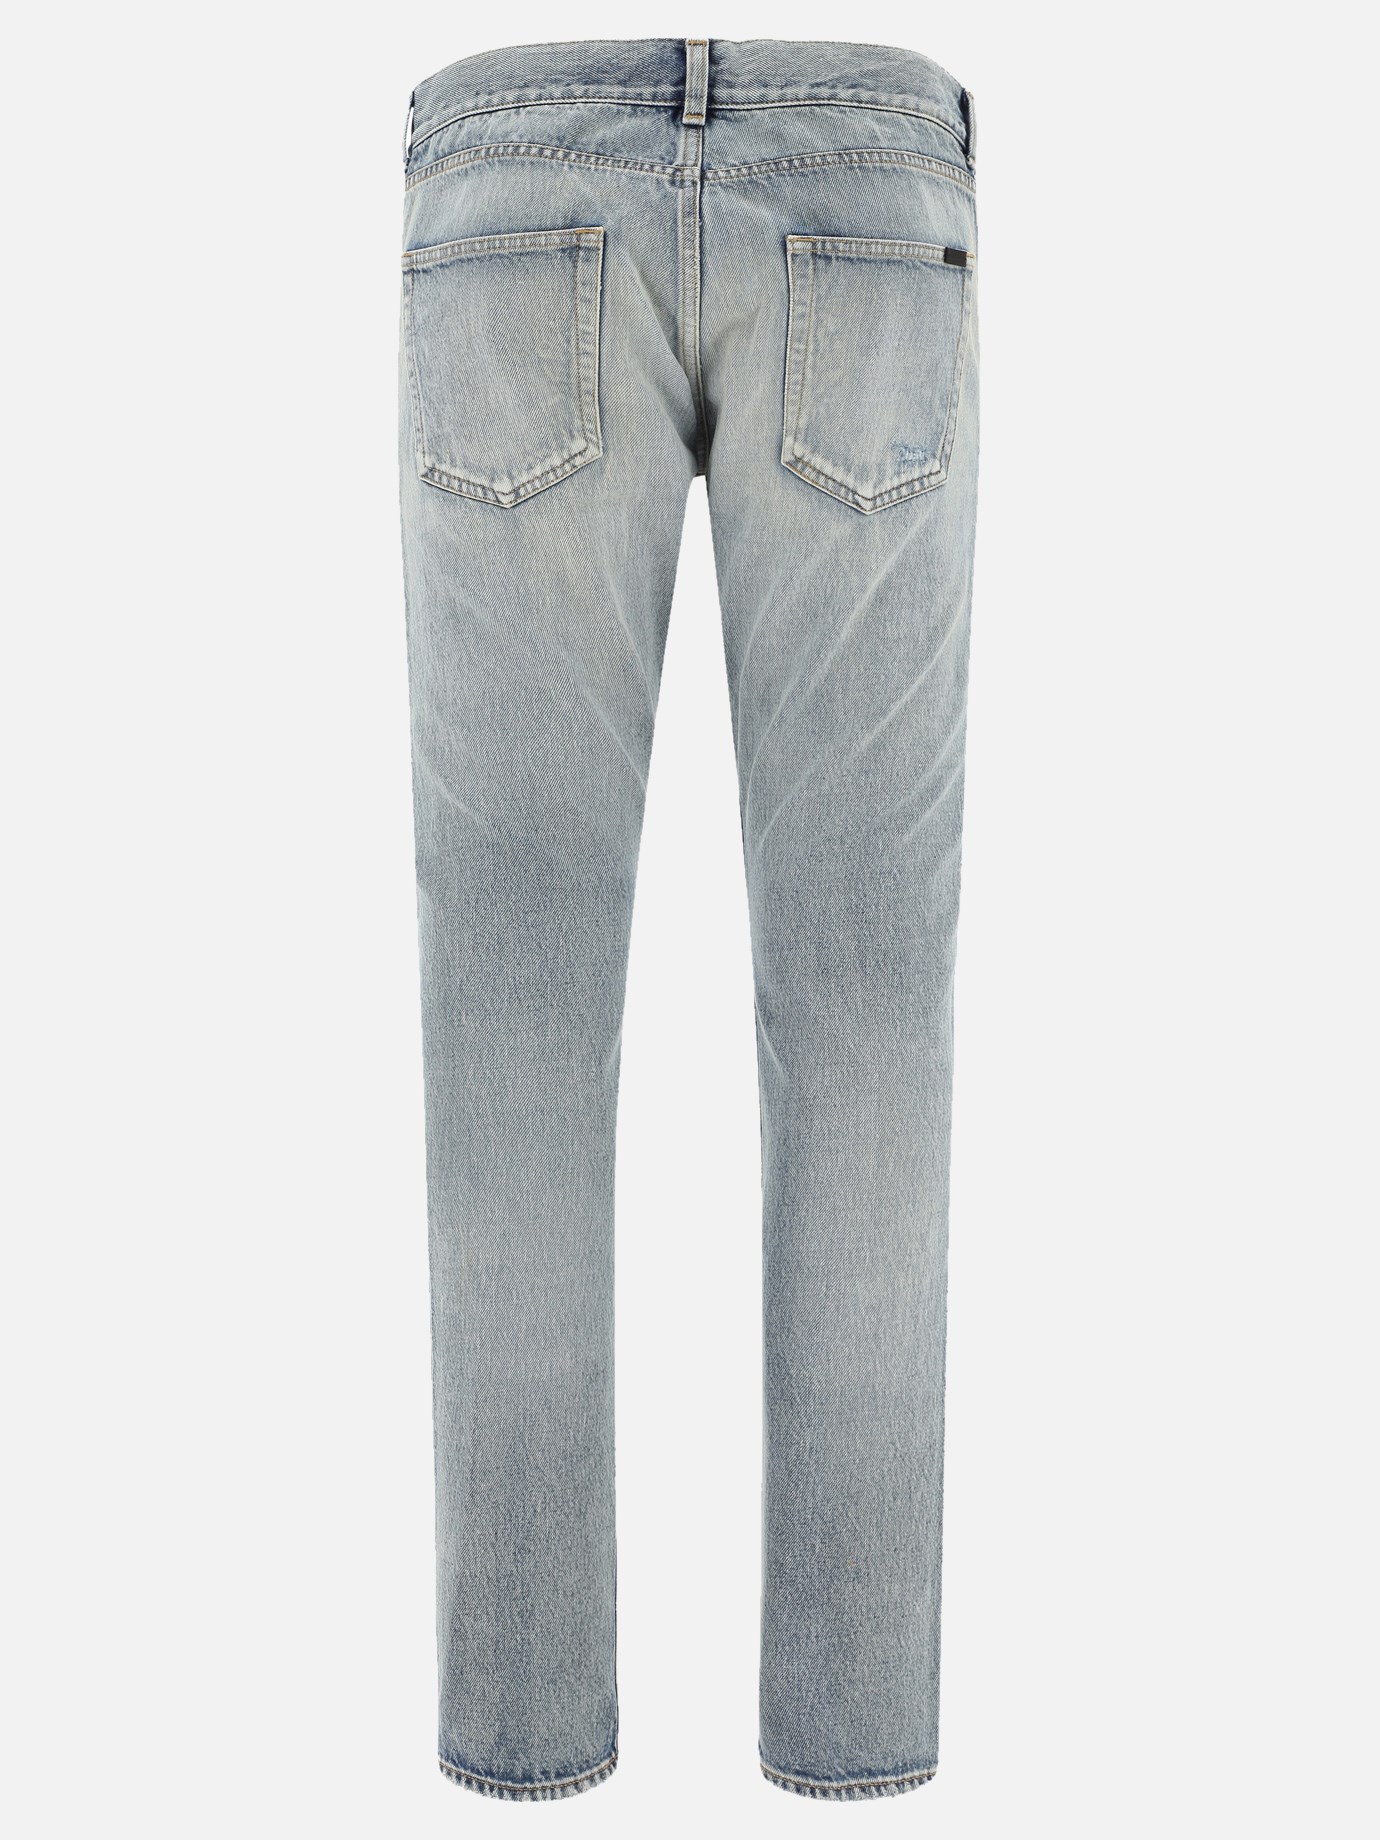 Distressed jeans by Saint Laurent